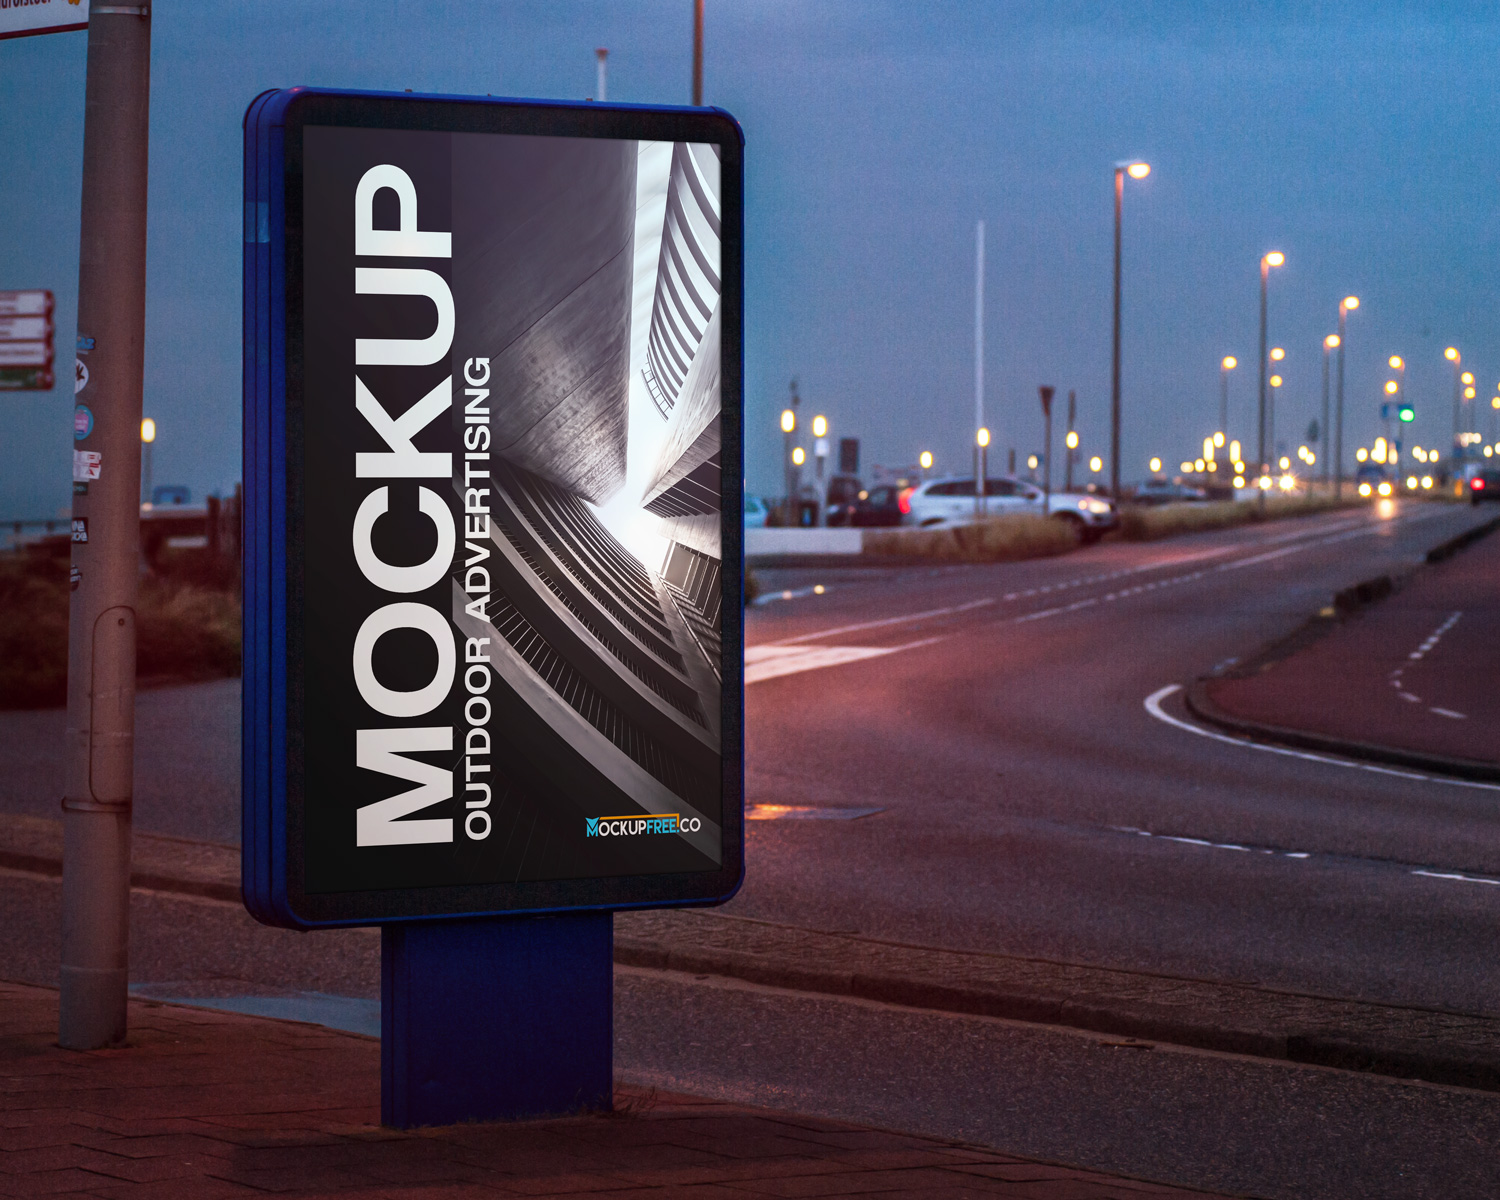 Free-Bus-Stop-Outdoor-Advertising-Mockup-01